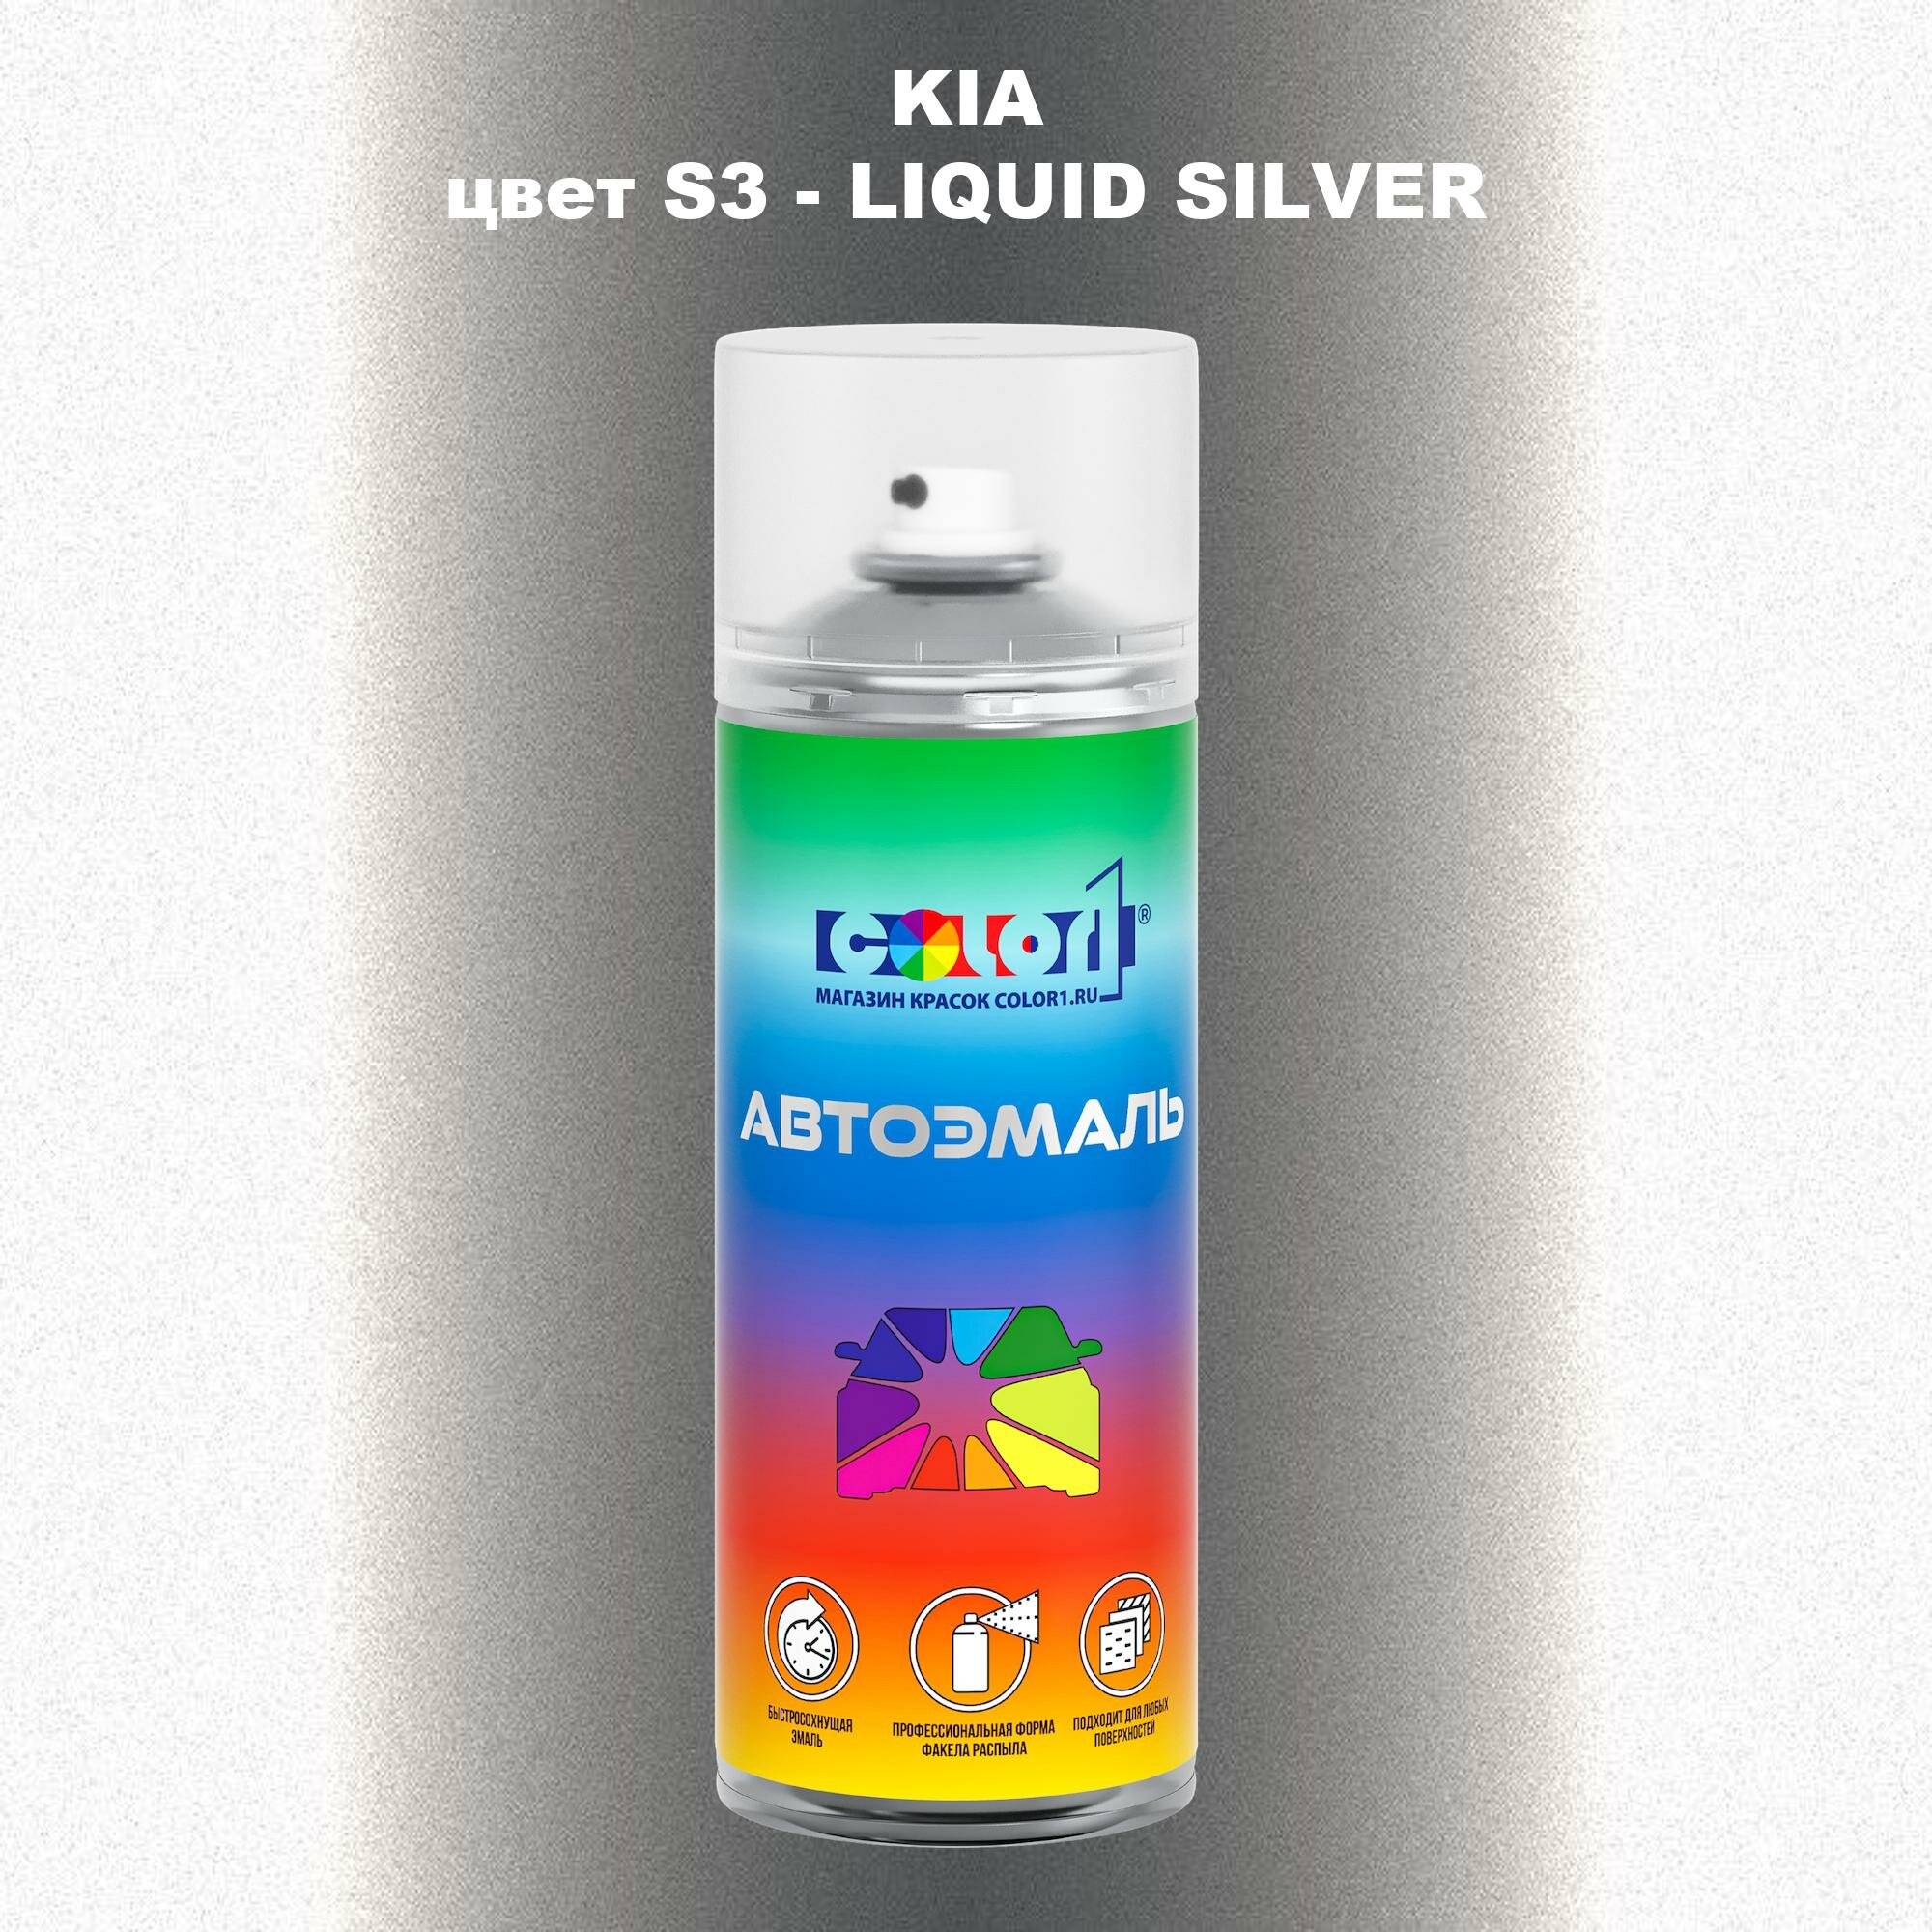 Аэрозольная краска COLOR1 для KIA, цвет S3 - LIQUID SILVER